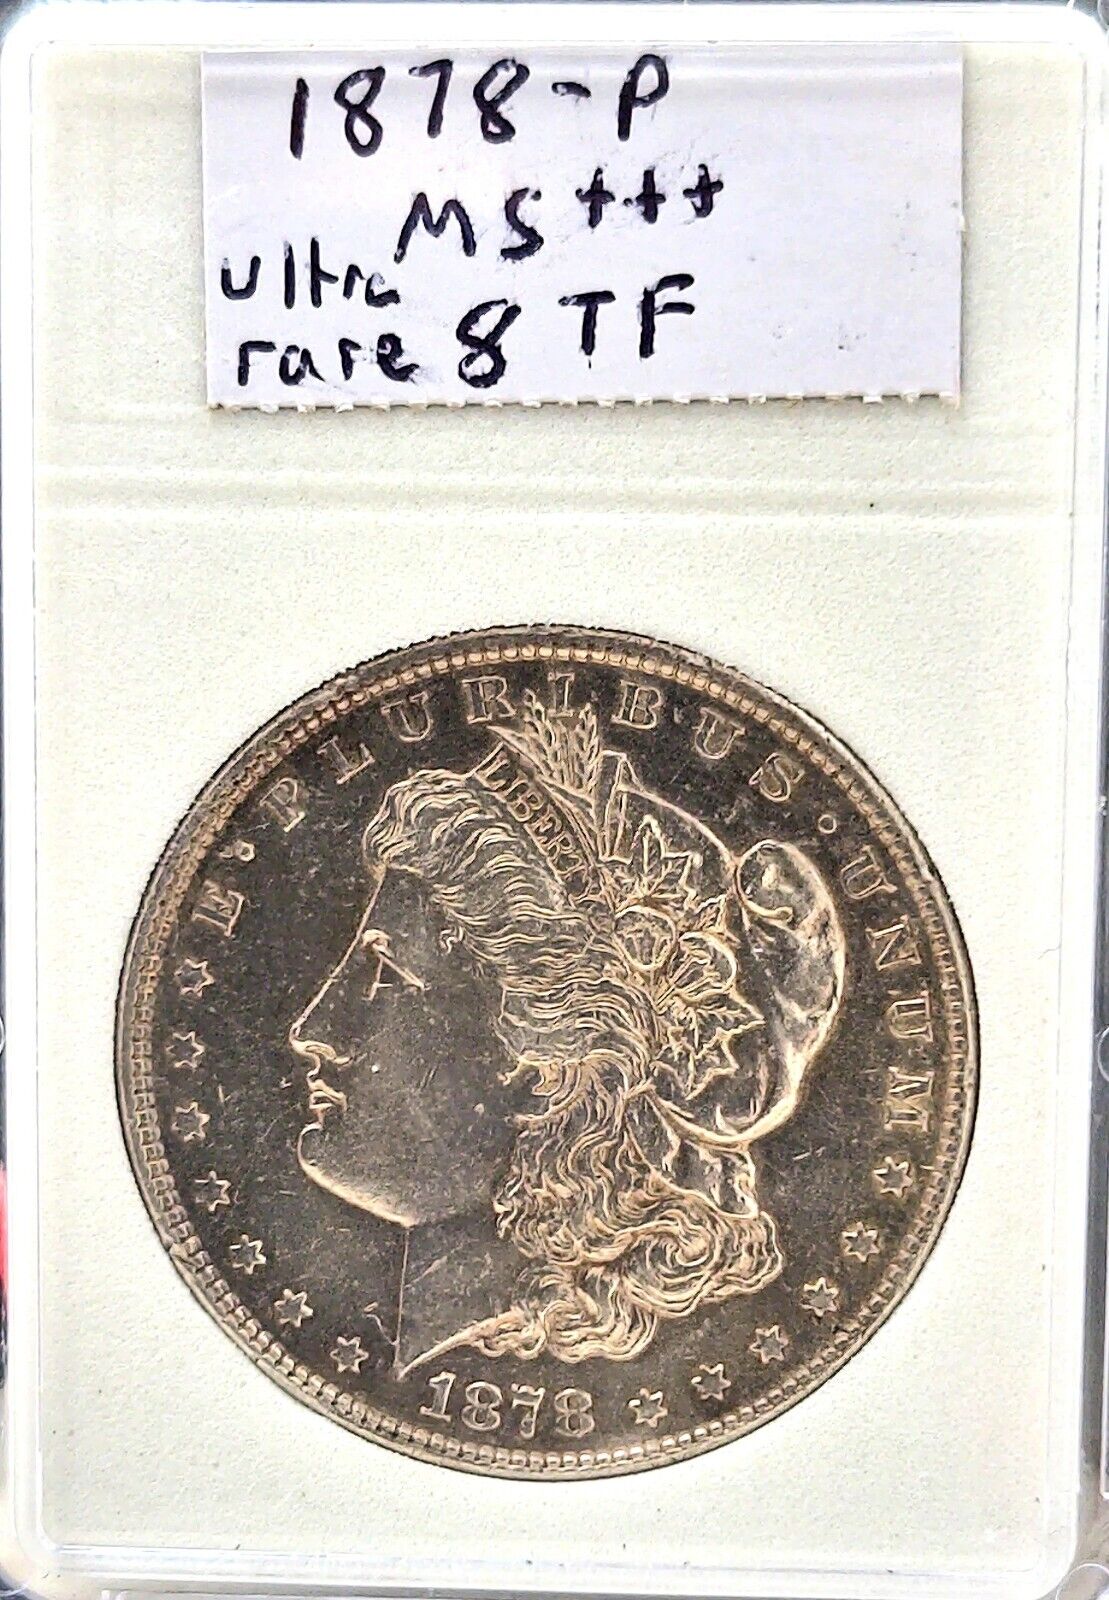 1878 P 8TF Gem Mint Condition.  Super Rare.  MS+++